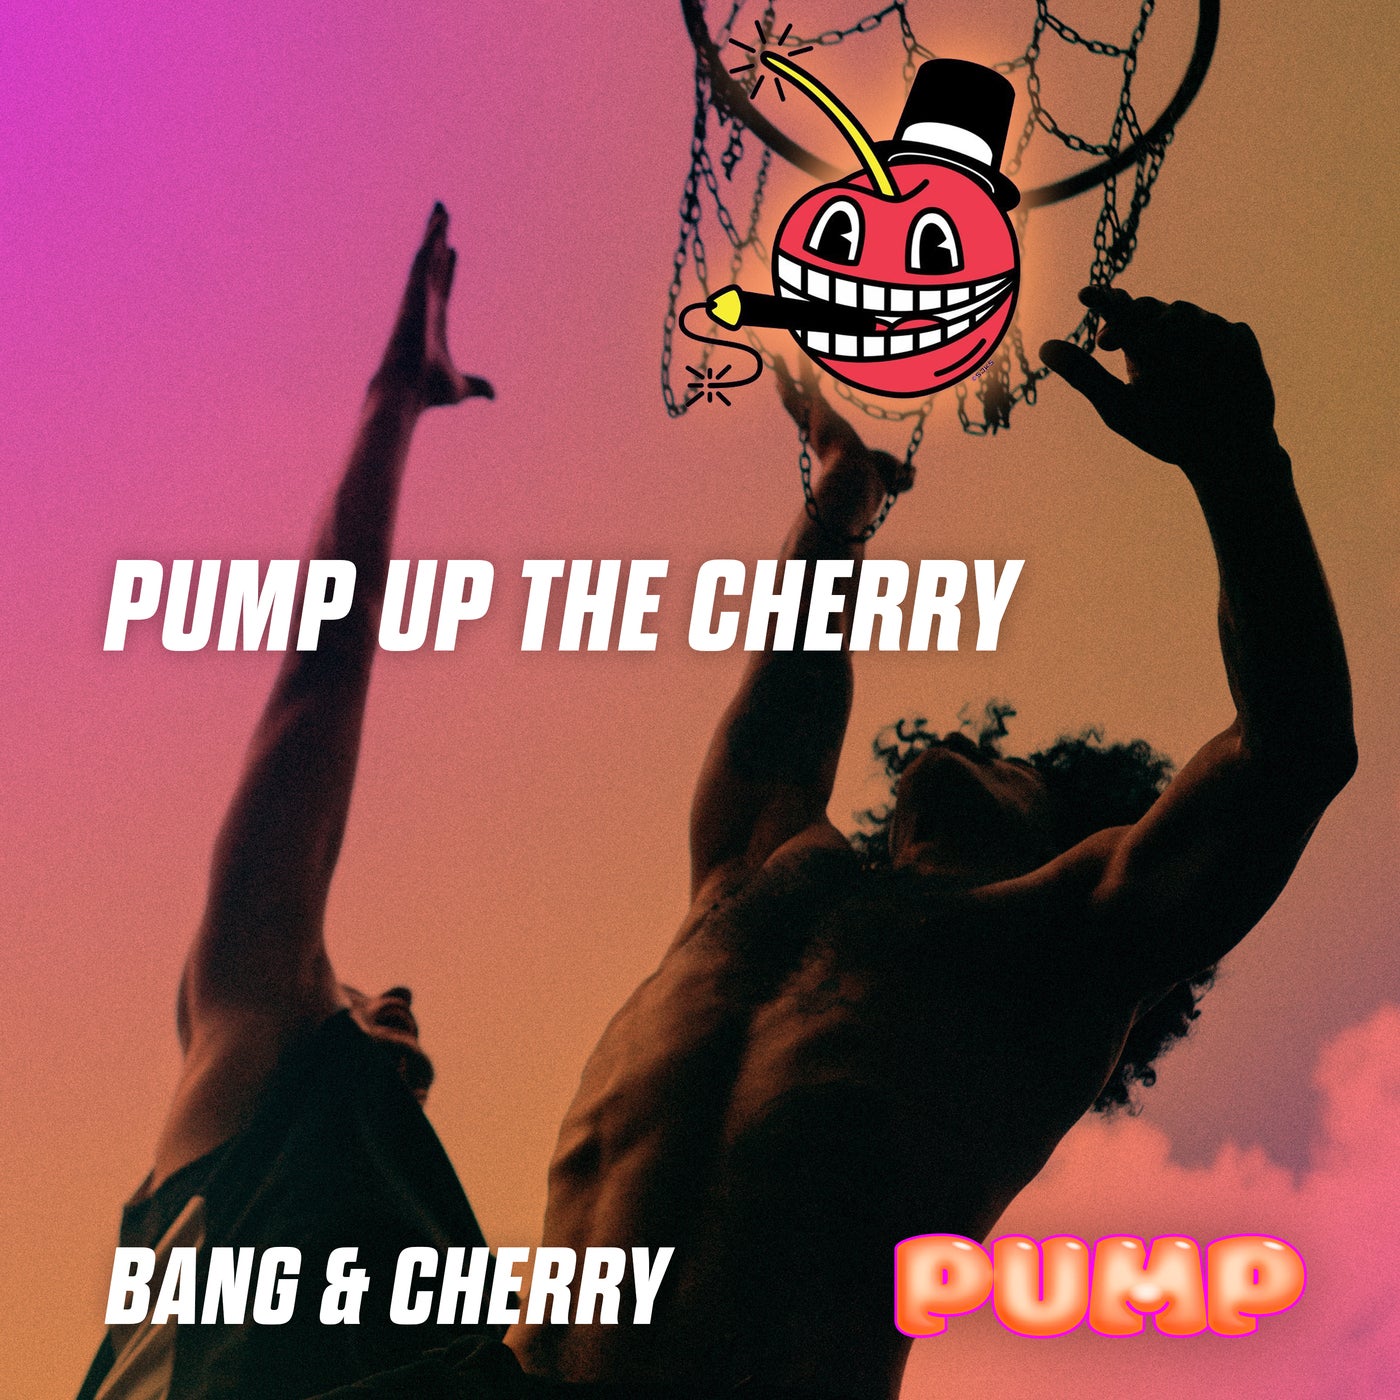 Pump up the Cherry